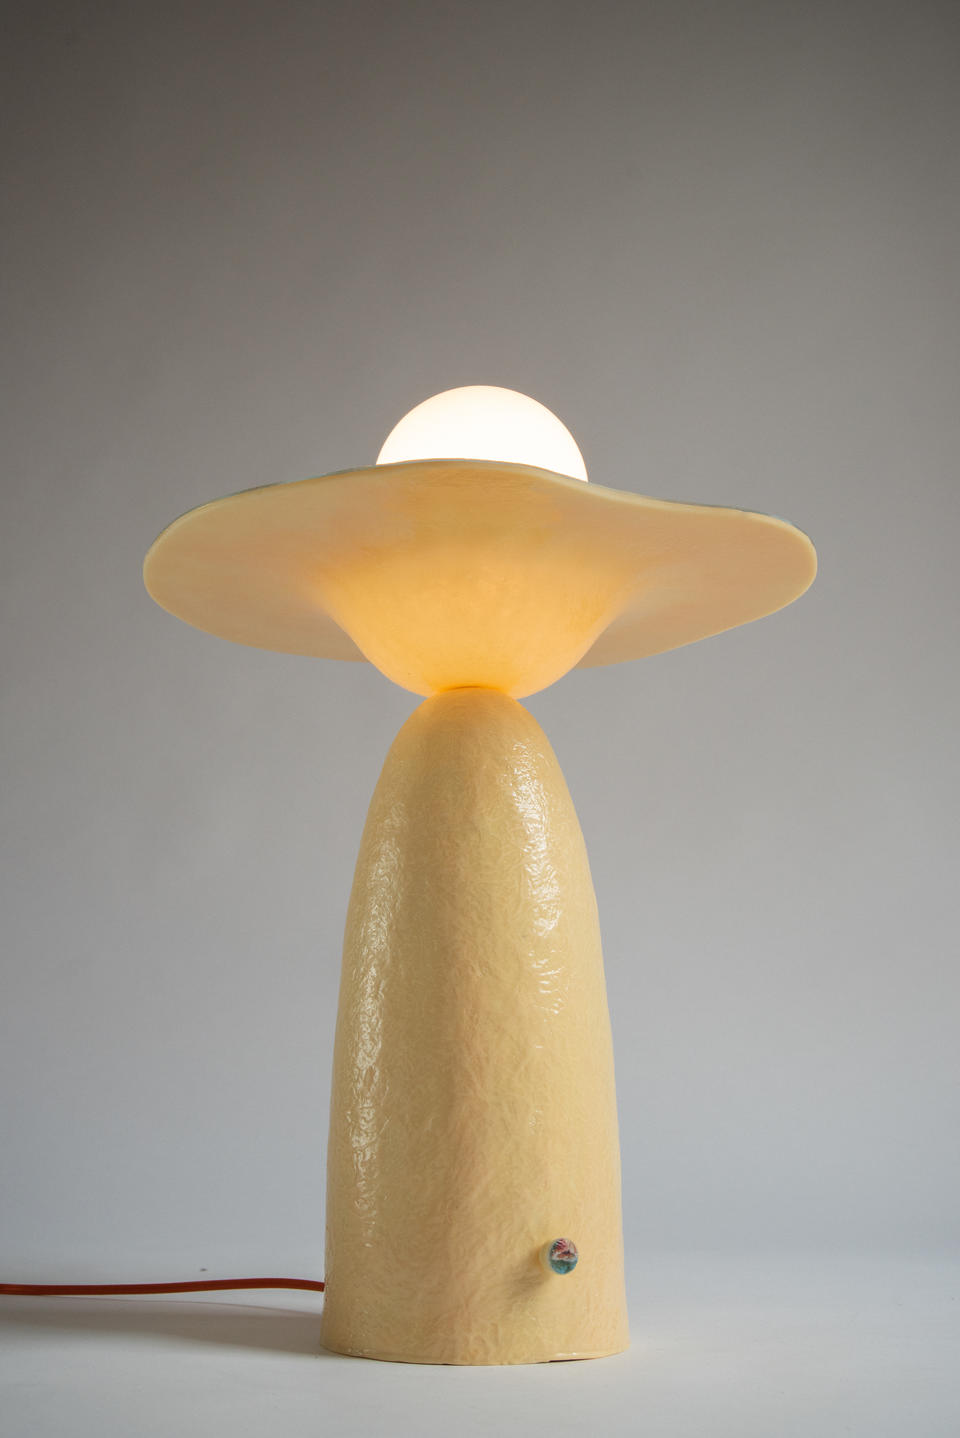 Detail image of the glowing underside of horizon lamp.